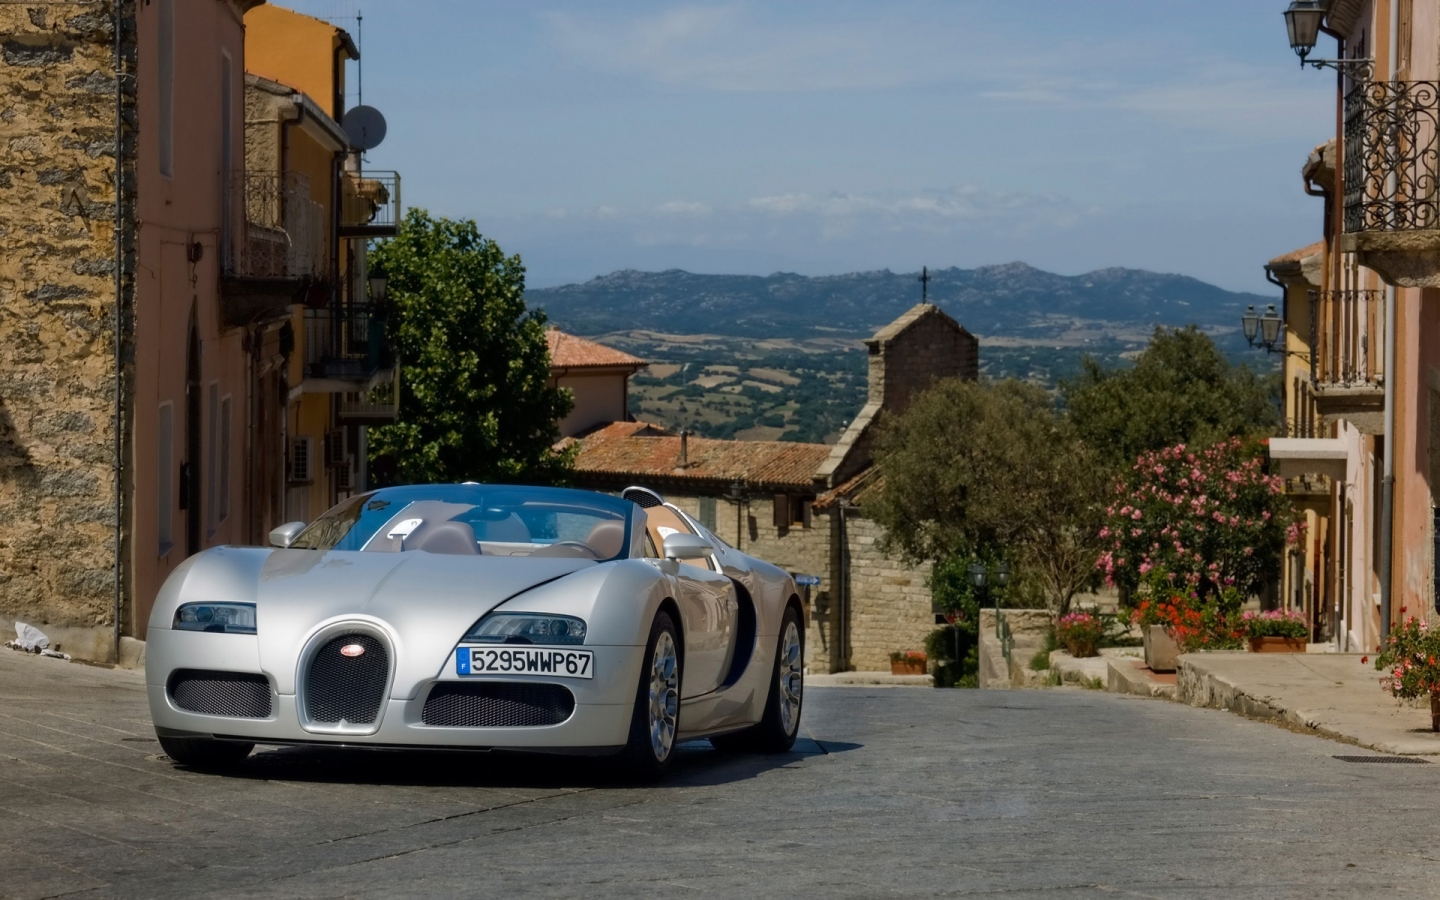 Bugatti Veyron 16.4 Grand Sport 2010 in Sardinia - Front Angle for 1440 x 900 widescreen resolution